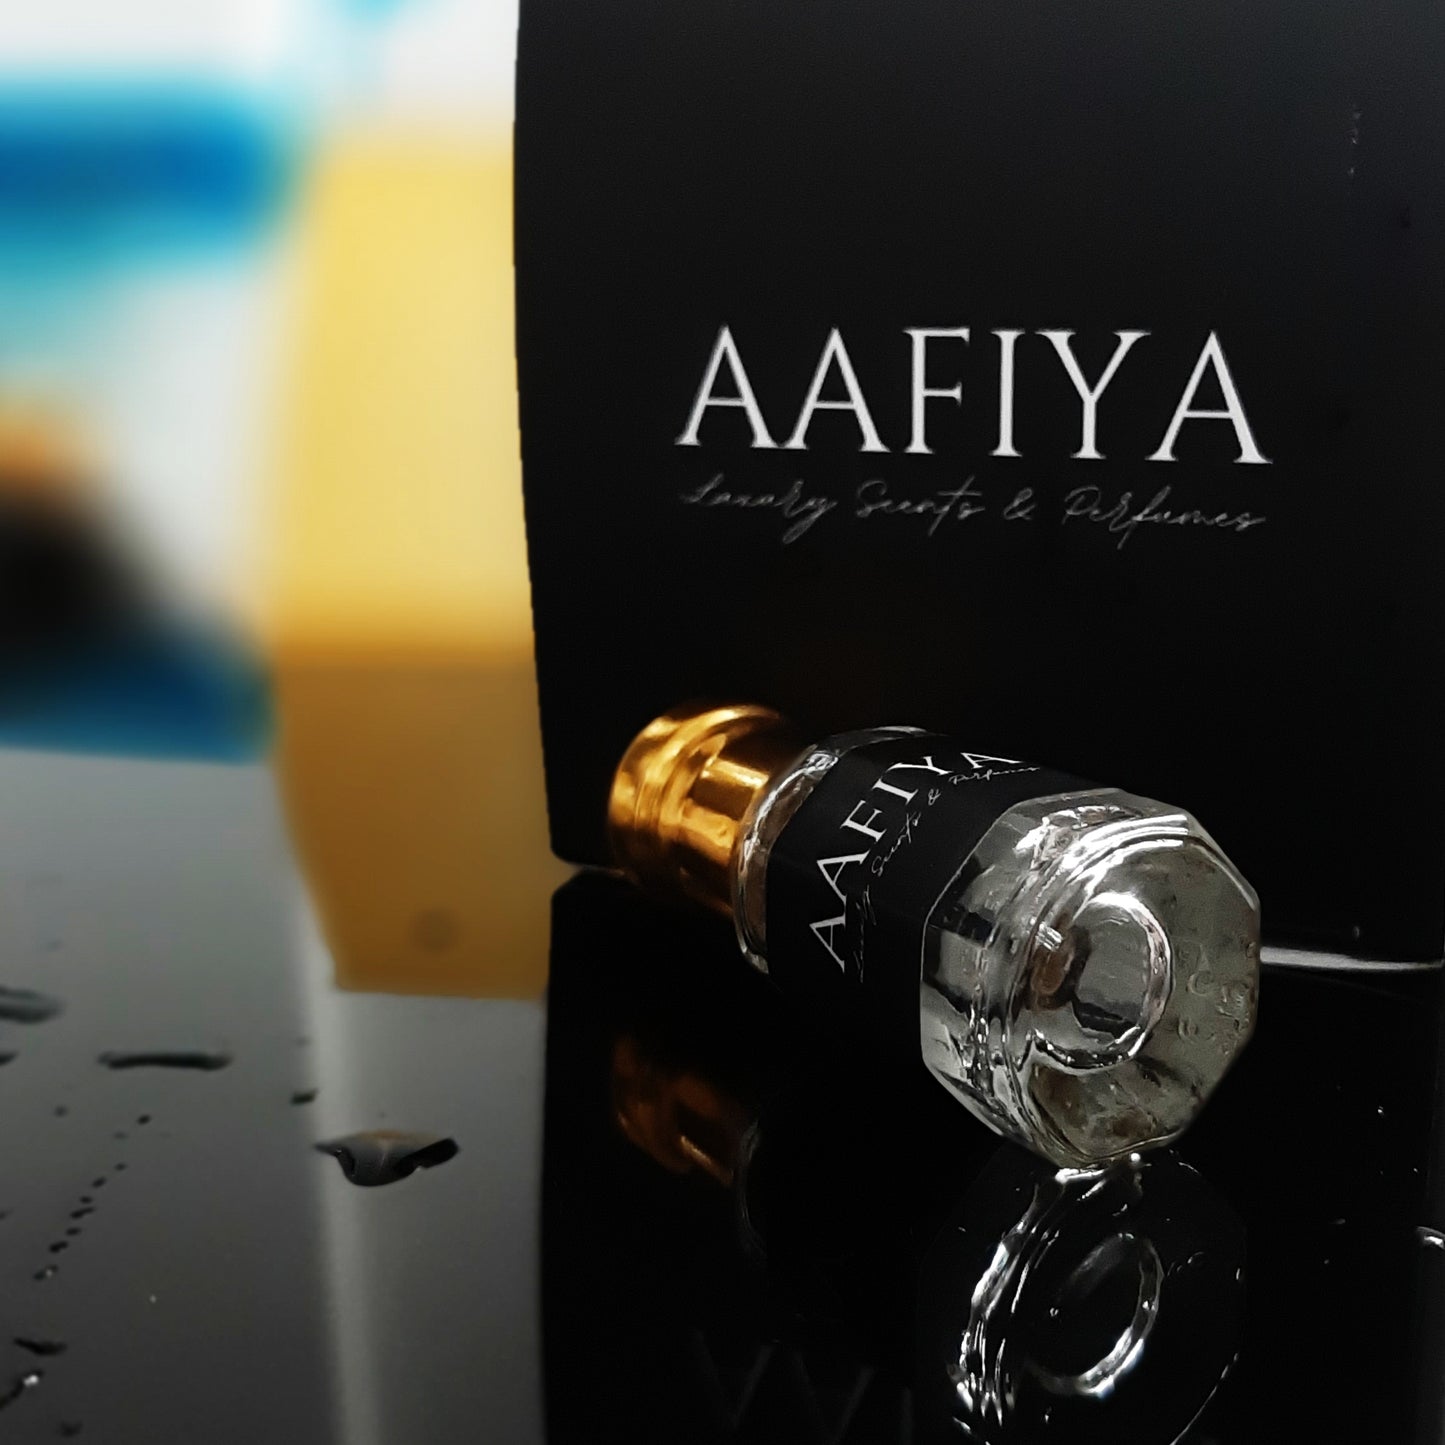 Terre d'Hermes - Aafiya Luxury Scents & Perfumes